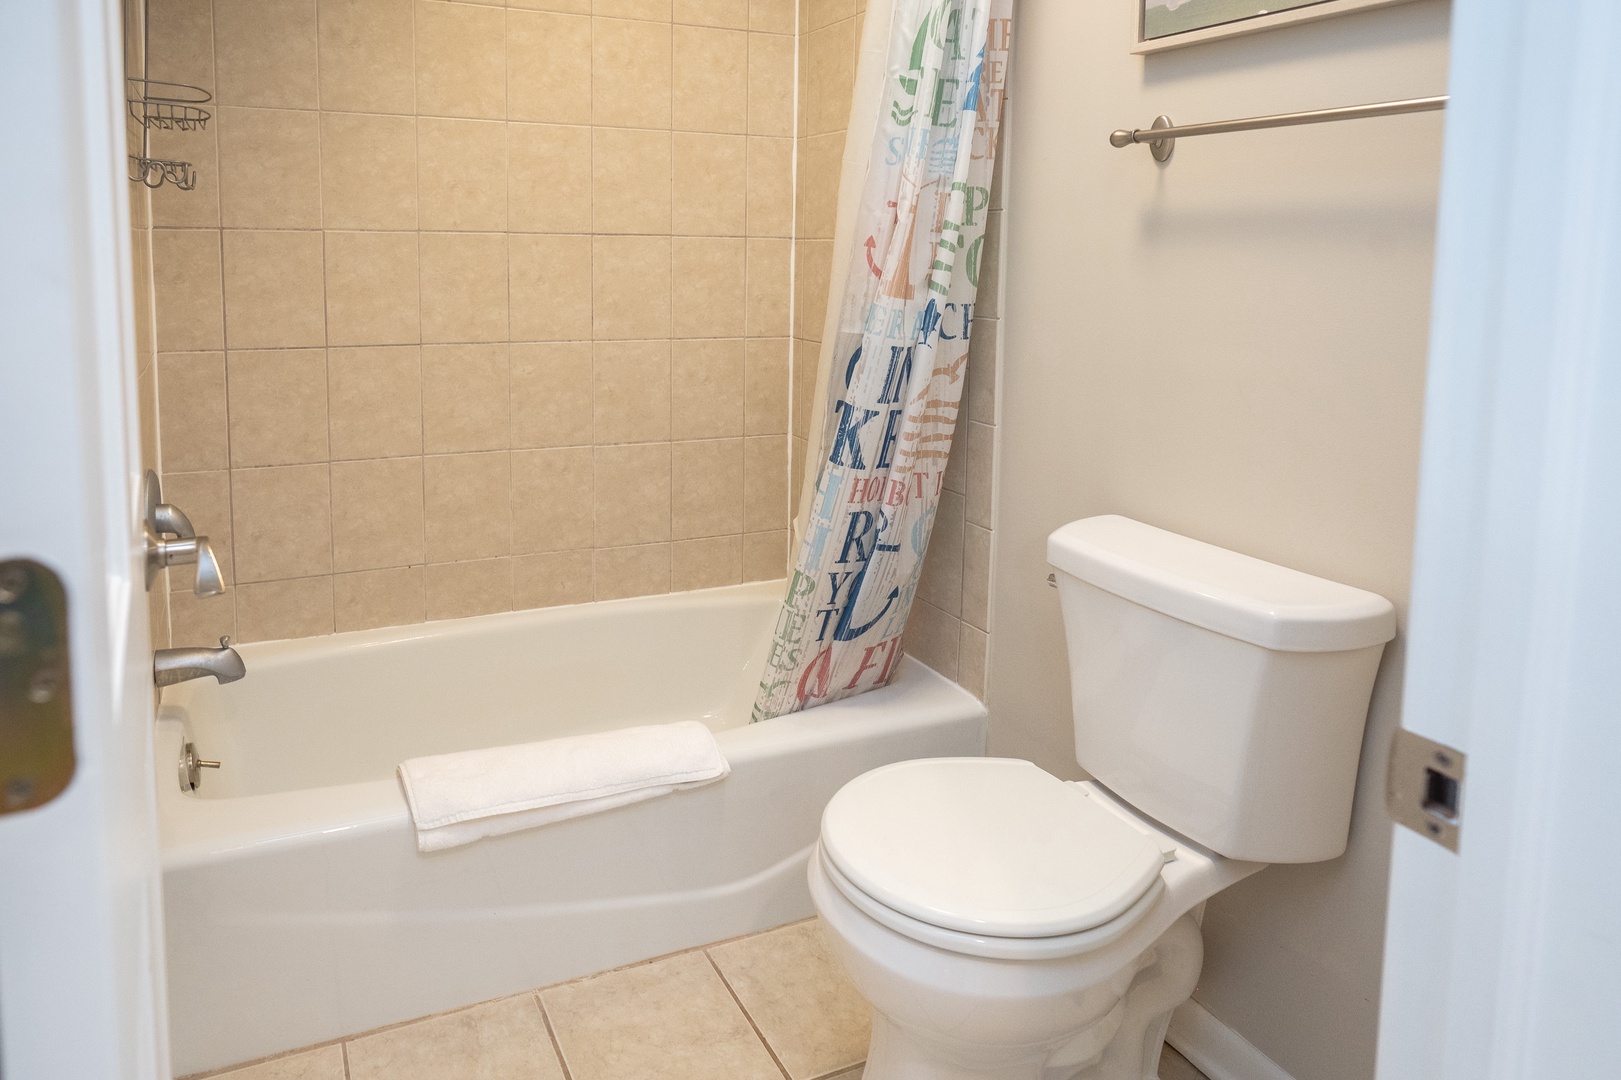 The full bathroom offers an oversized vanity & shower/tub combo